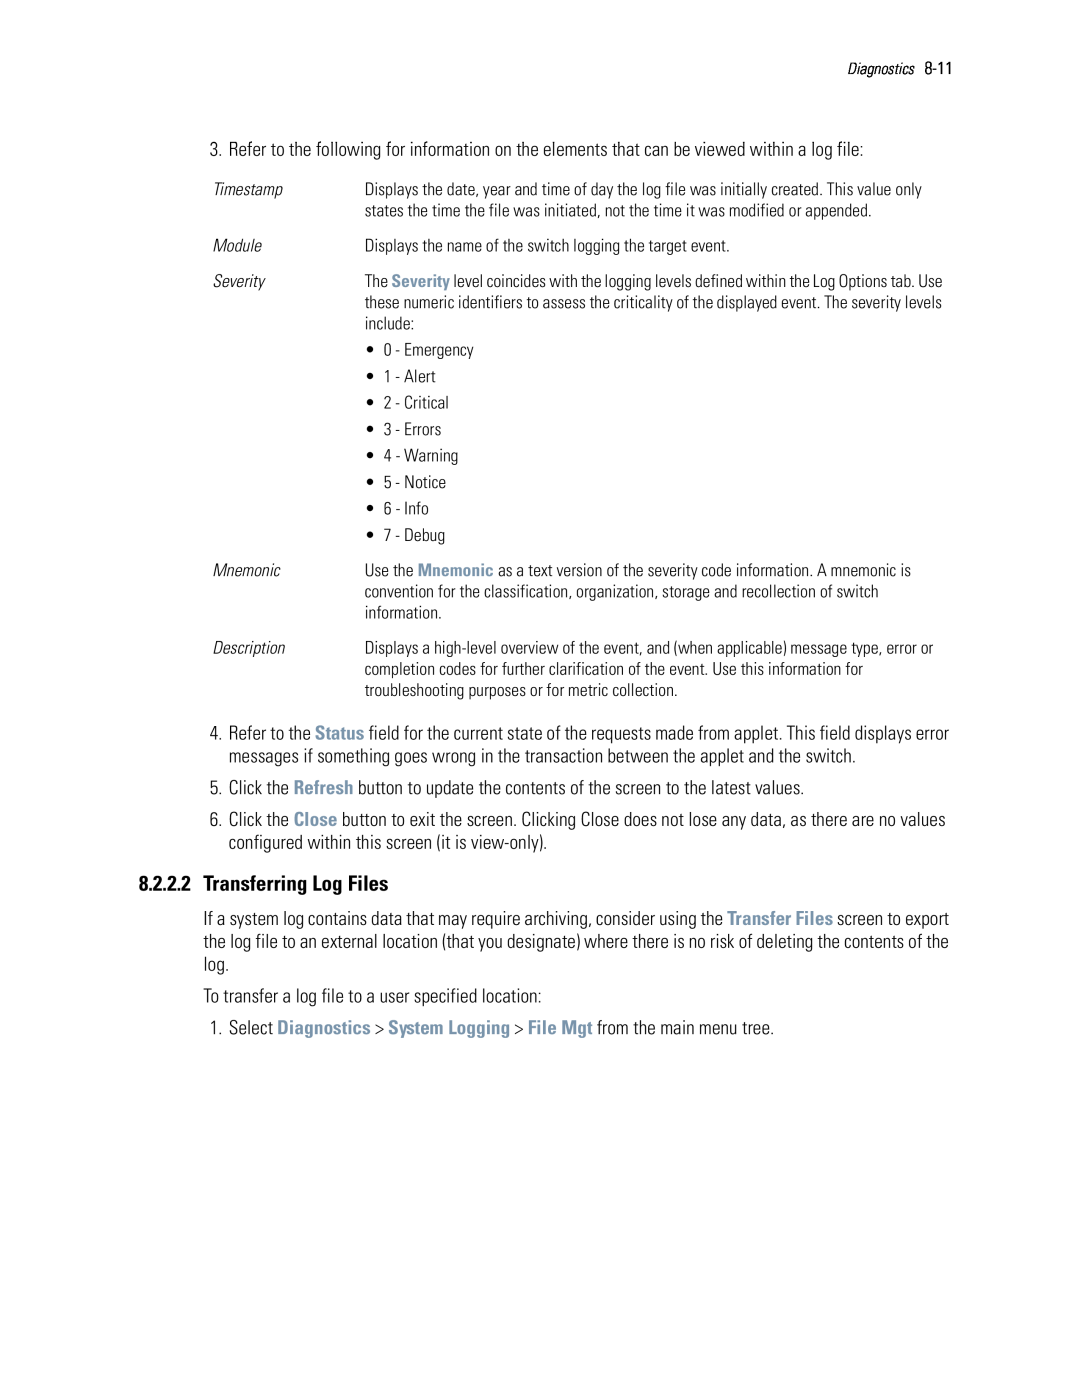 Motorola WS5100 manual 8.2.2.2Transferring Log Files 